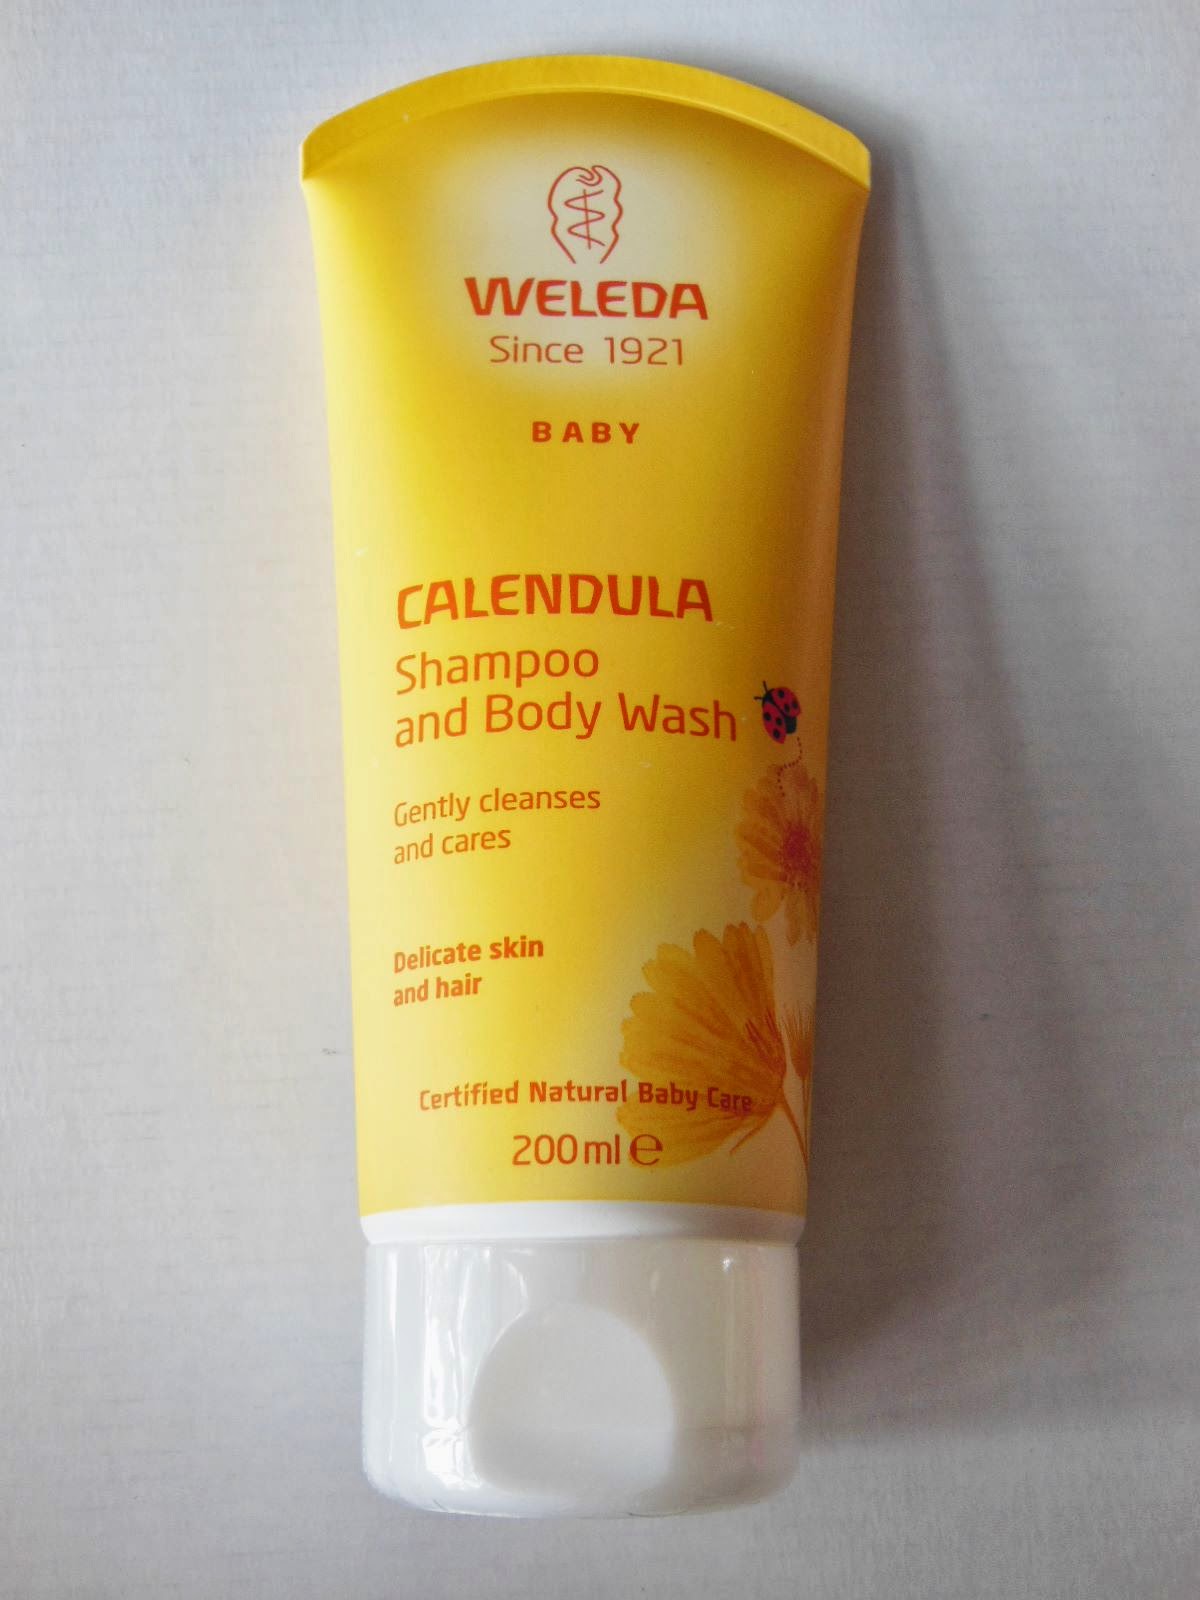 Product Weleda Baby Calendula Shampoo and Body Wash and Baby Oil | The Beauty & Lifestyle Hunter